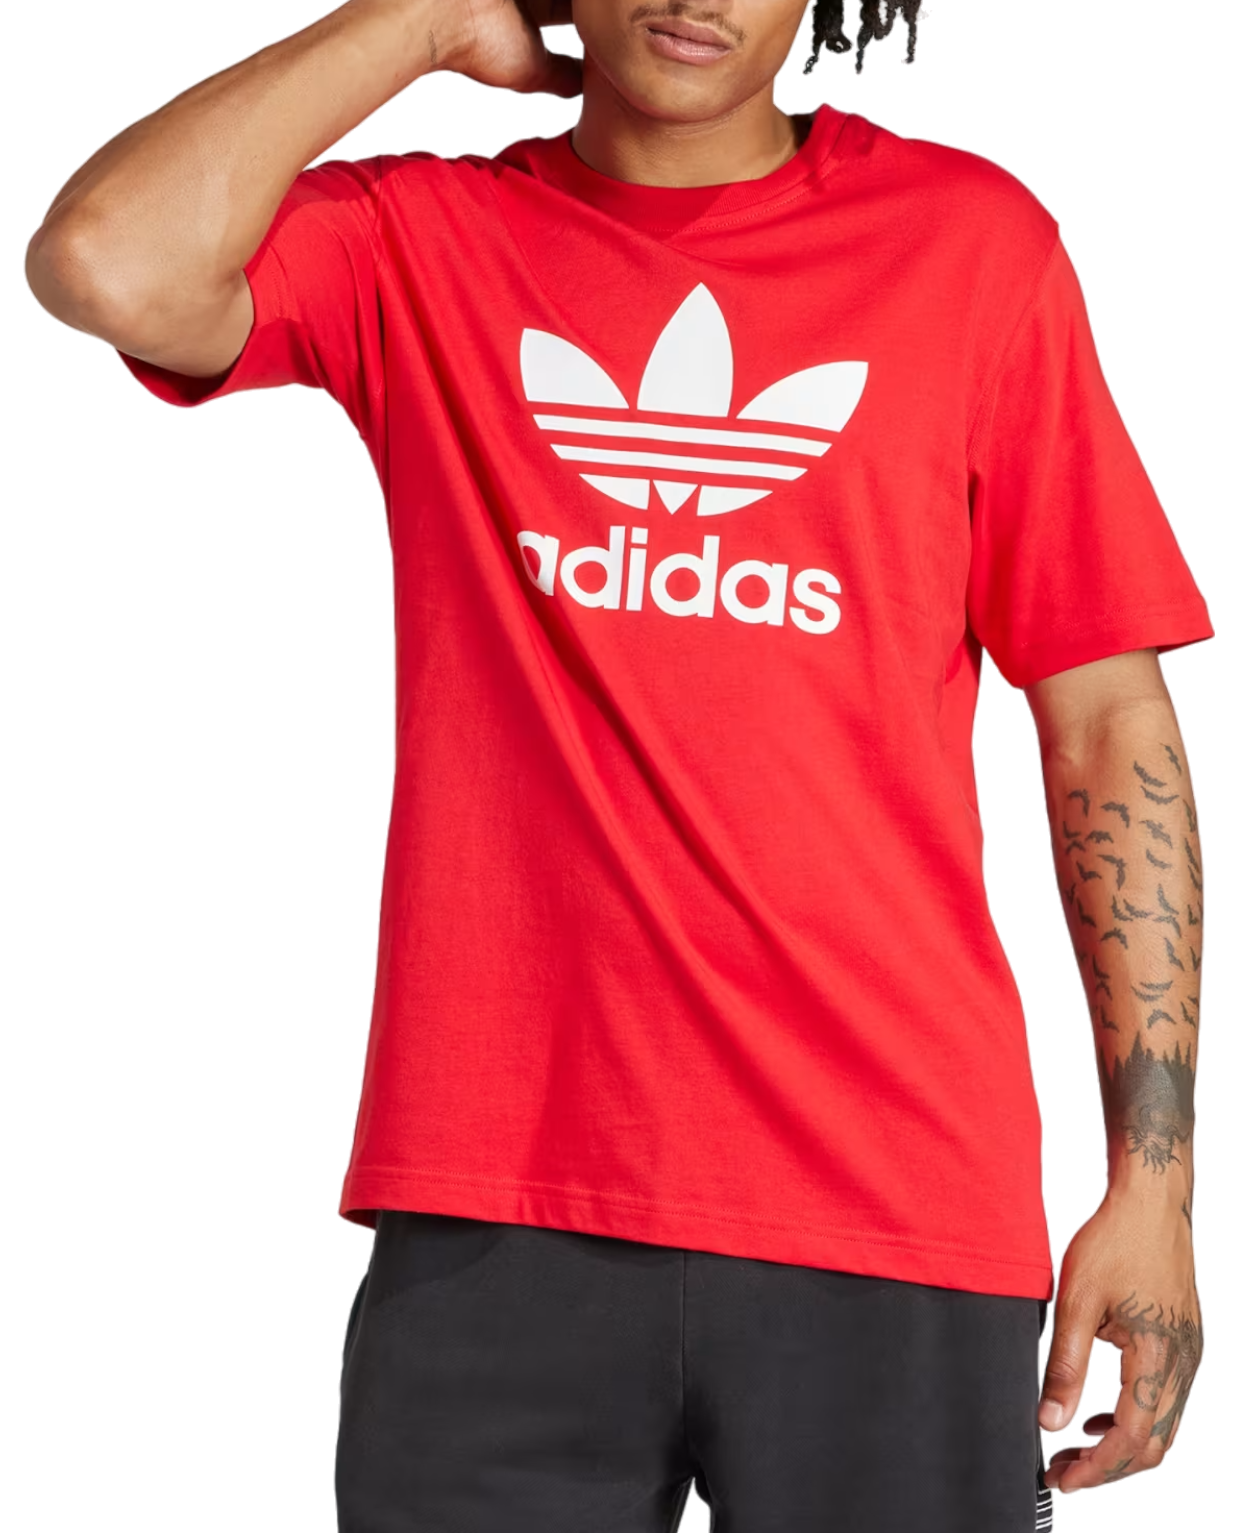 Pánské tričko s krátkým rukávem adidas Originals Trefoil